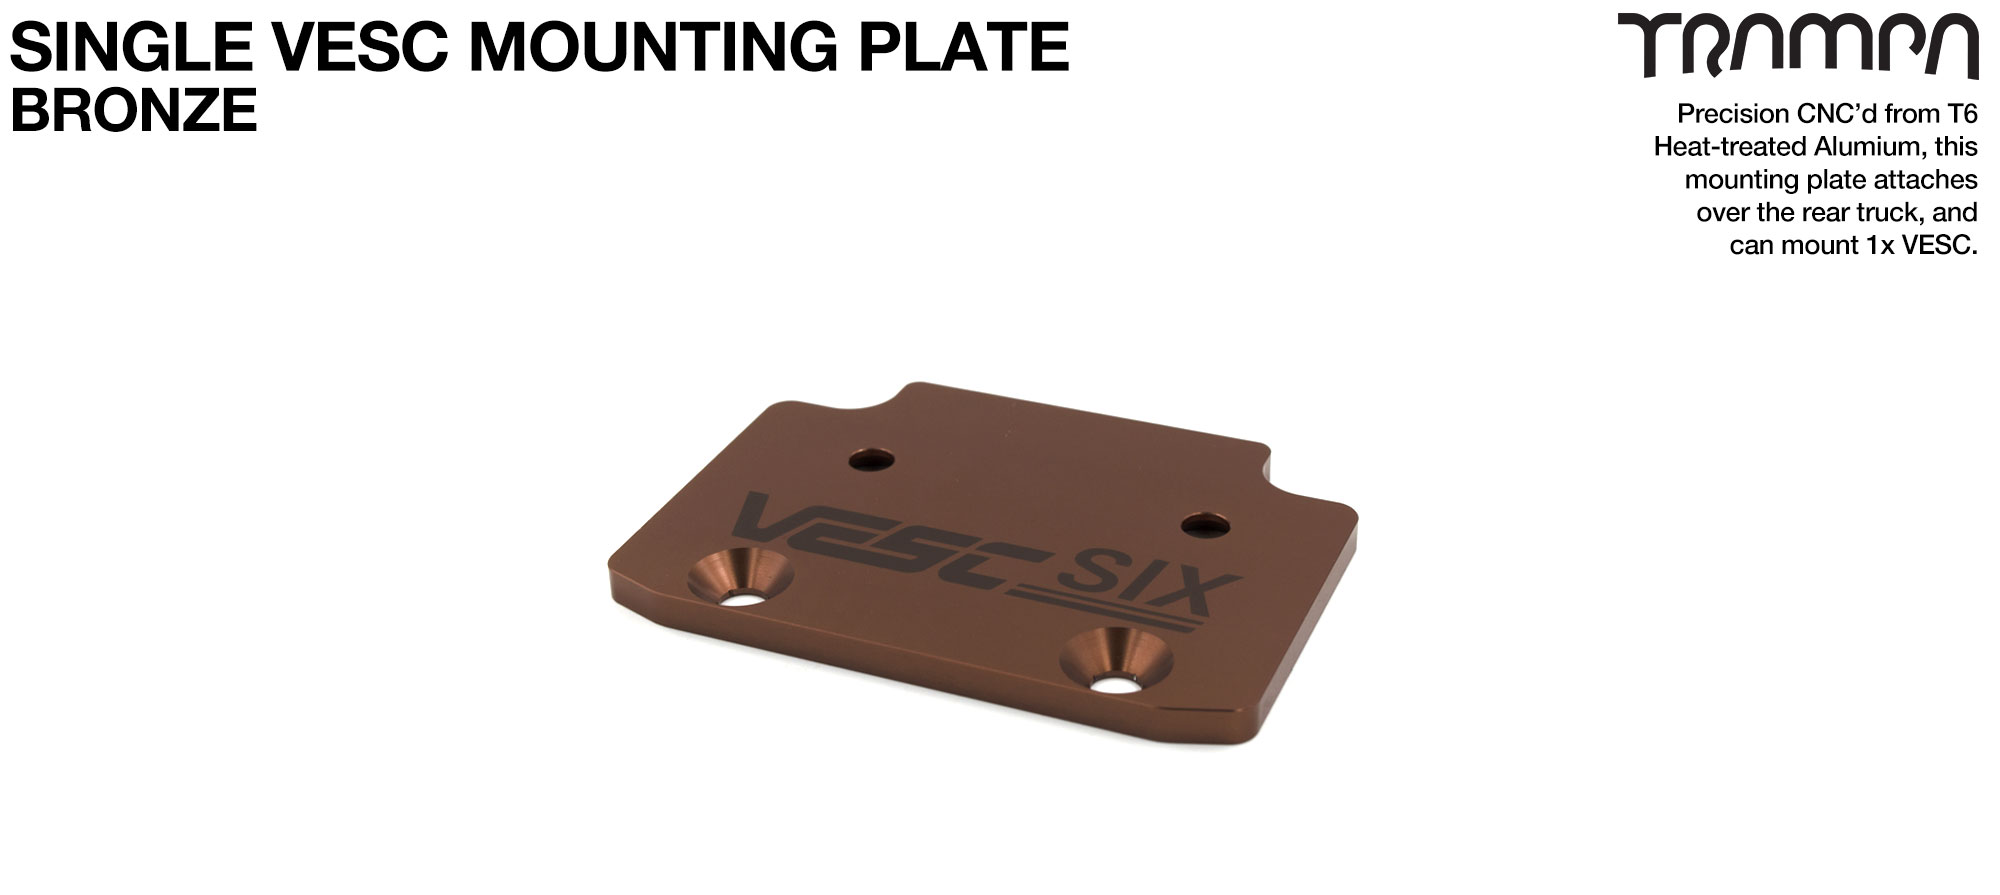 2x SINGLE VESC ALUMINIUM Mounting Plate - BRONZE 